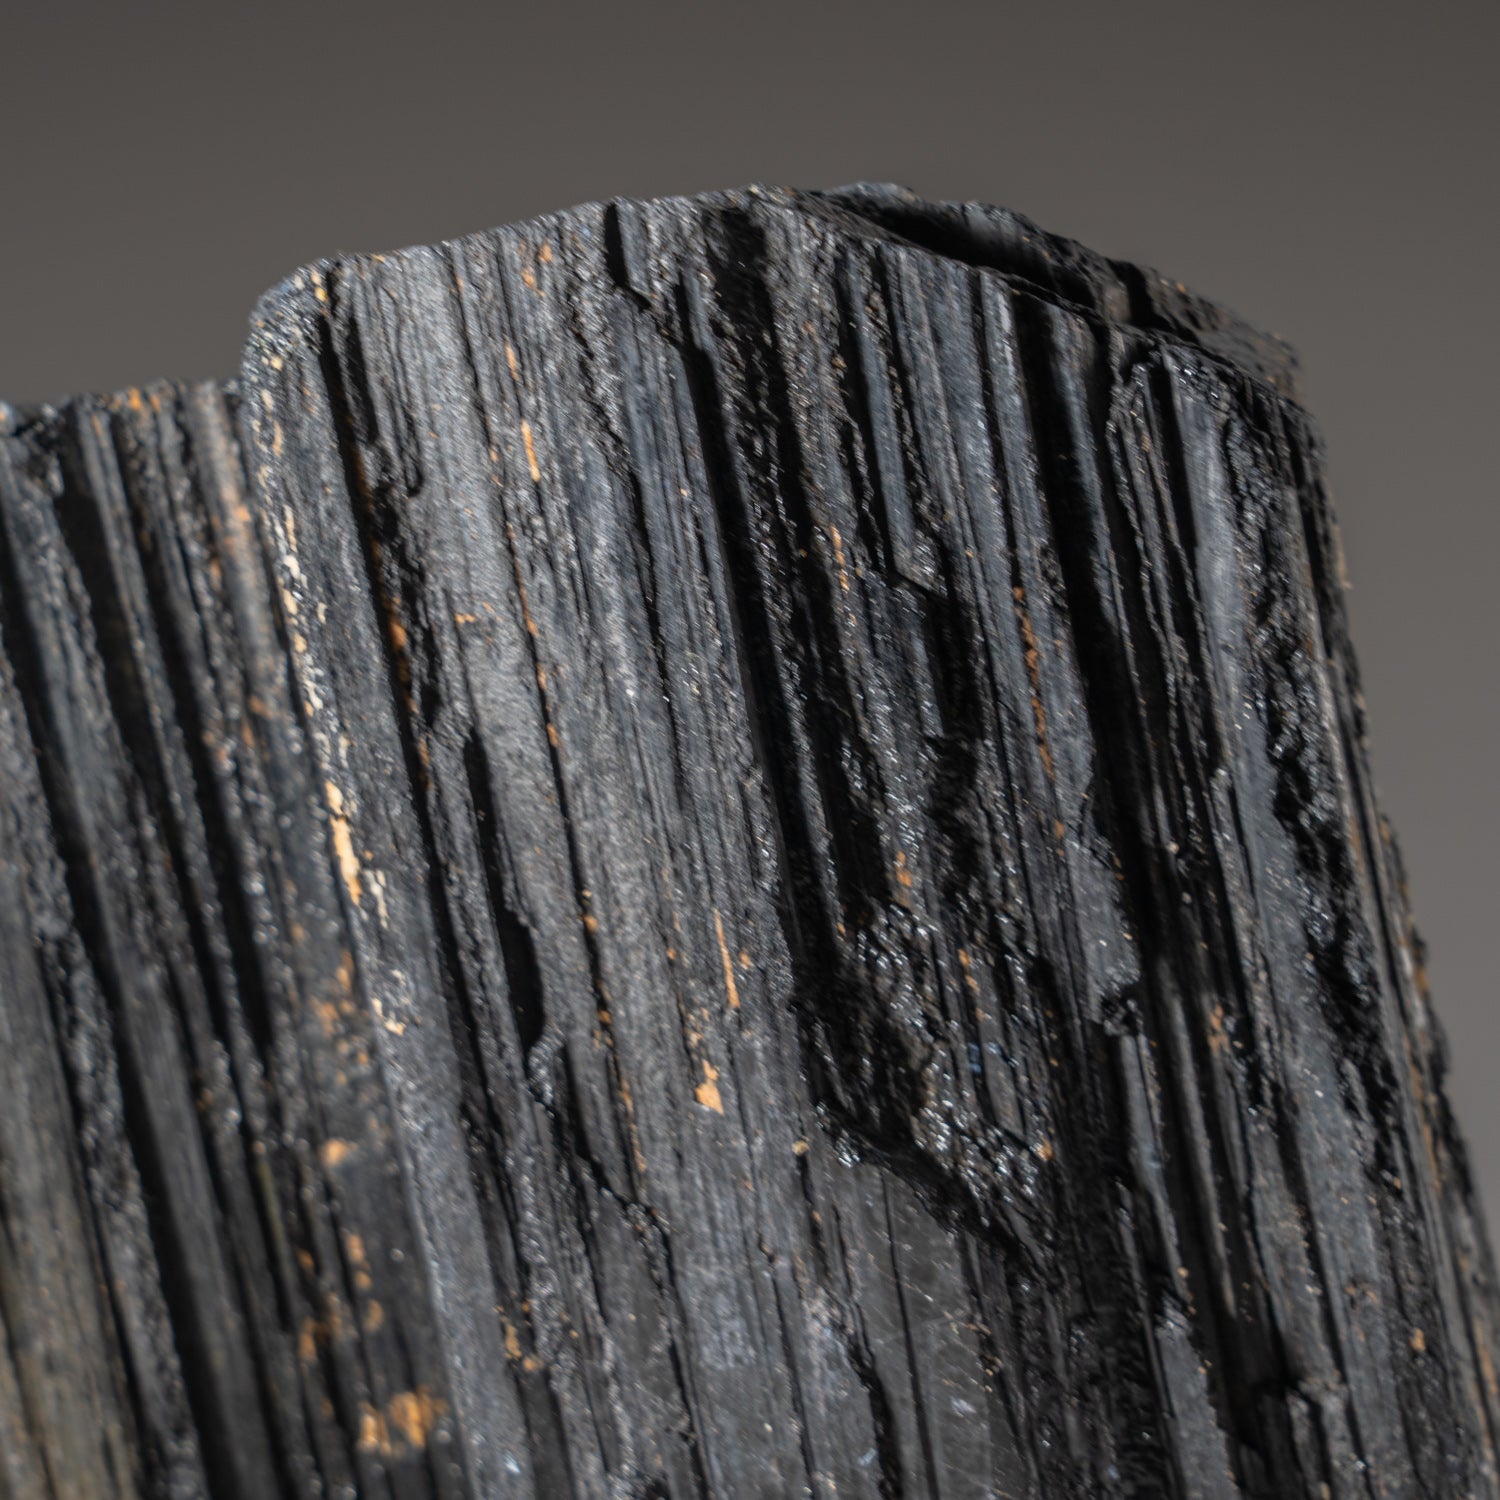 Genuine Black Tourmaline Crystal From Brazil (3.25 lbs)